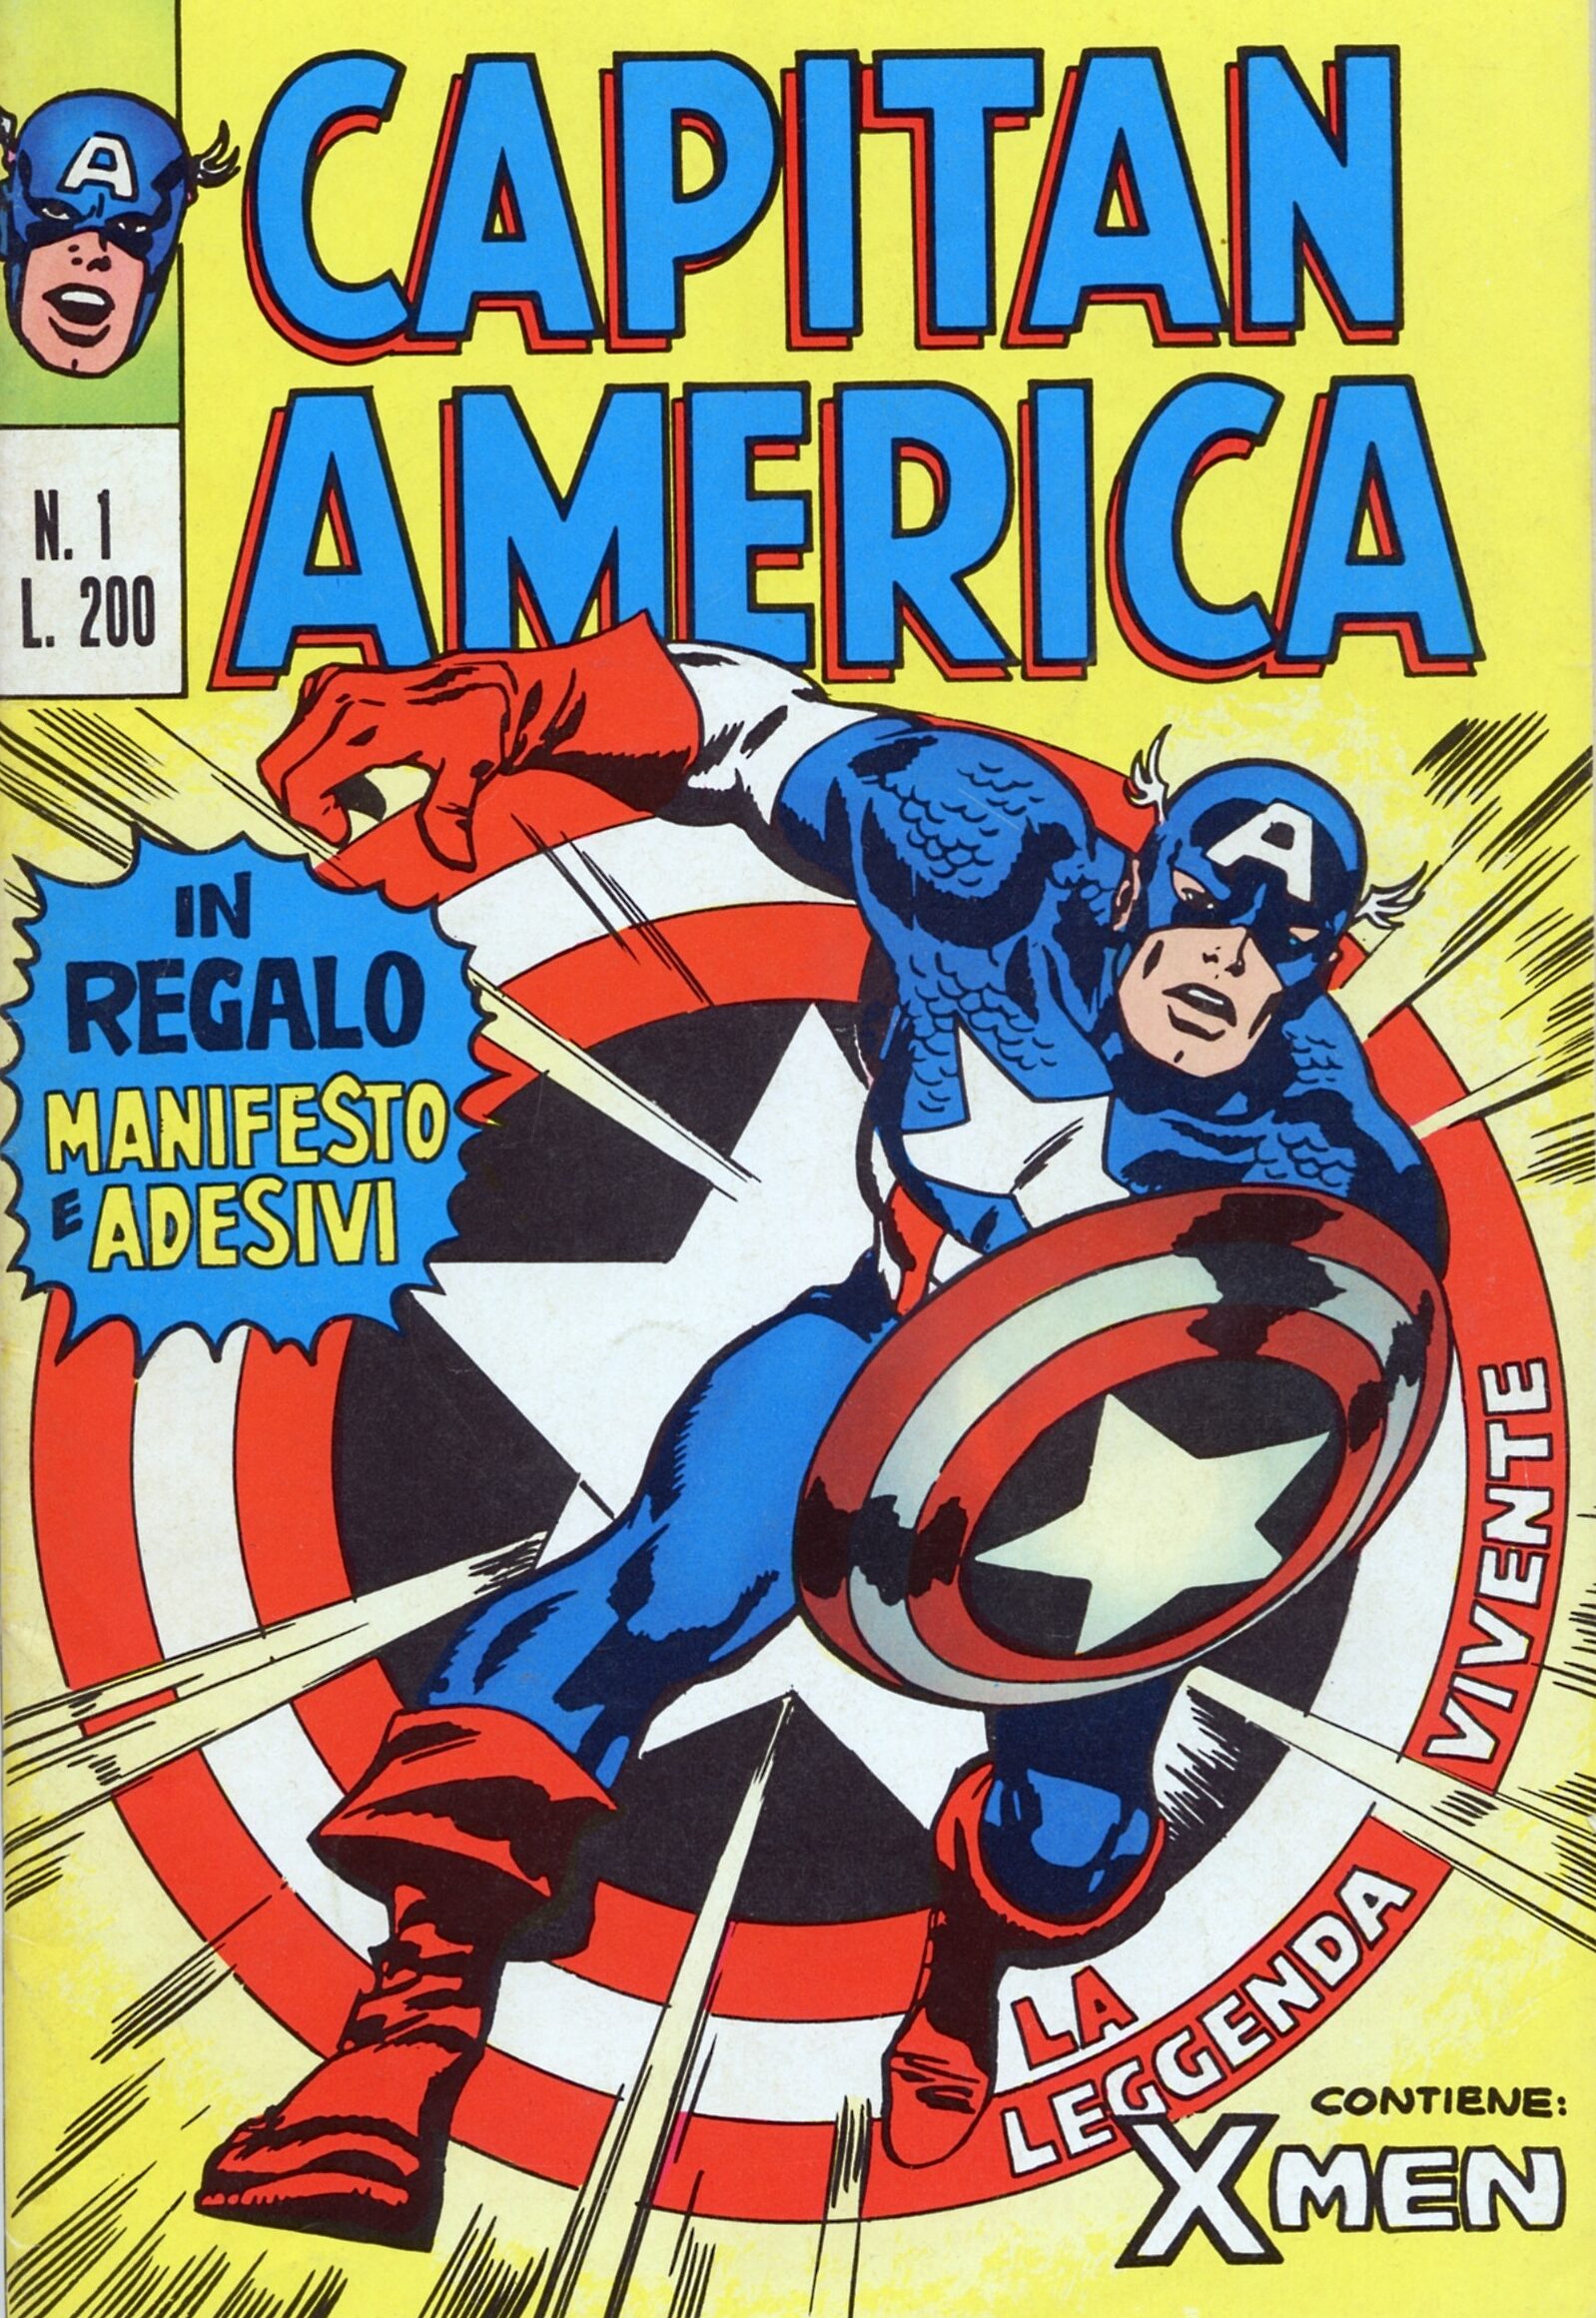 Capitan America - 1 marzo 1941